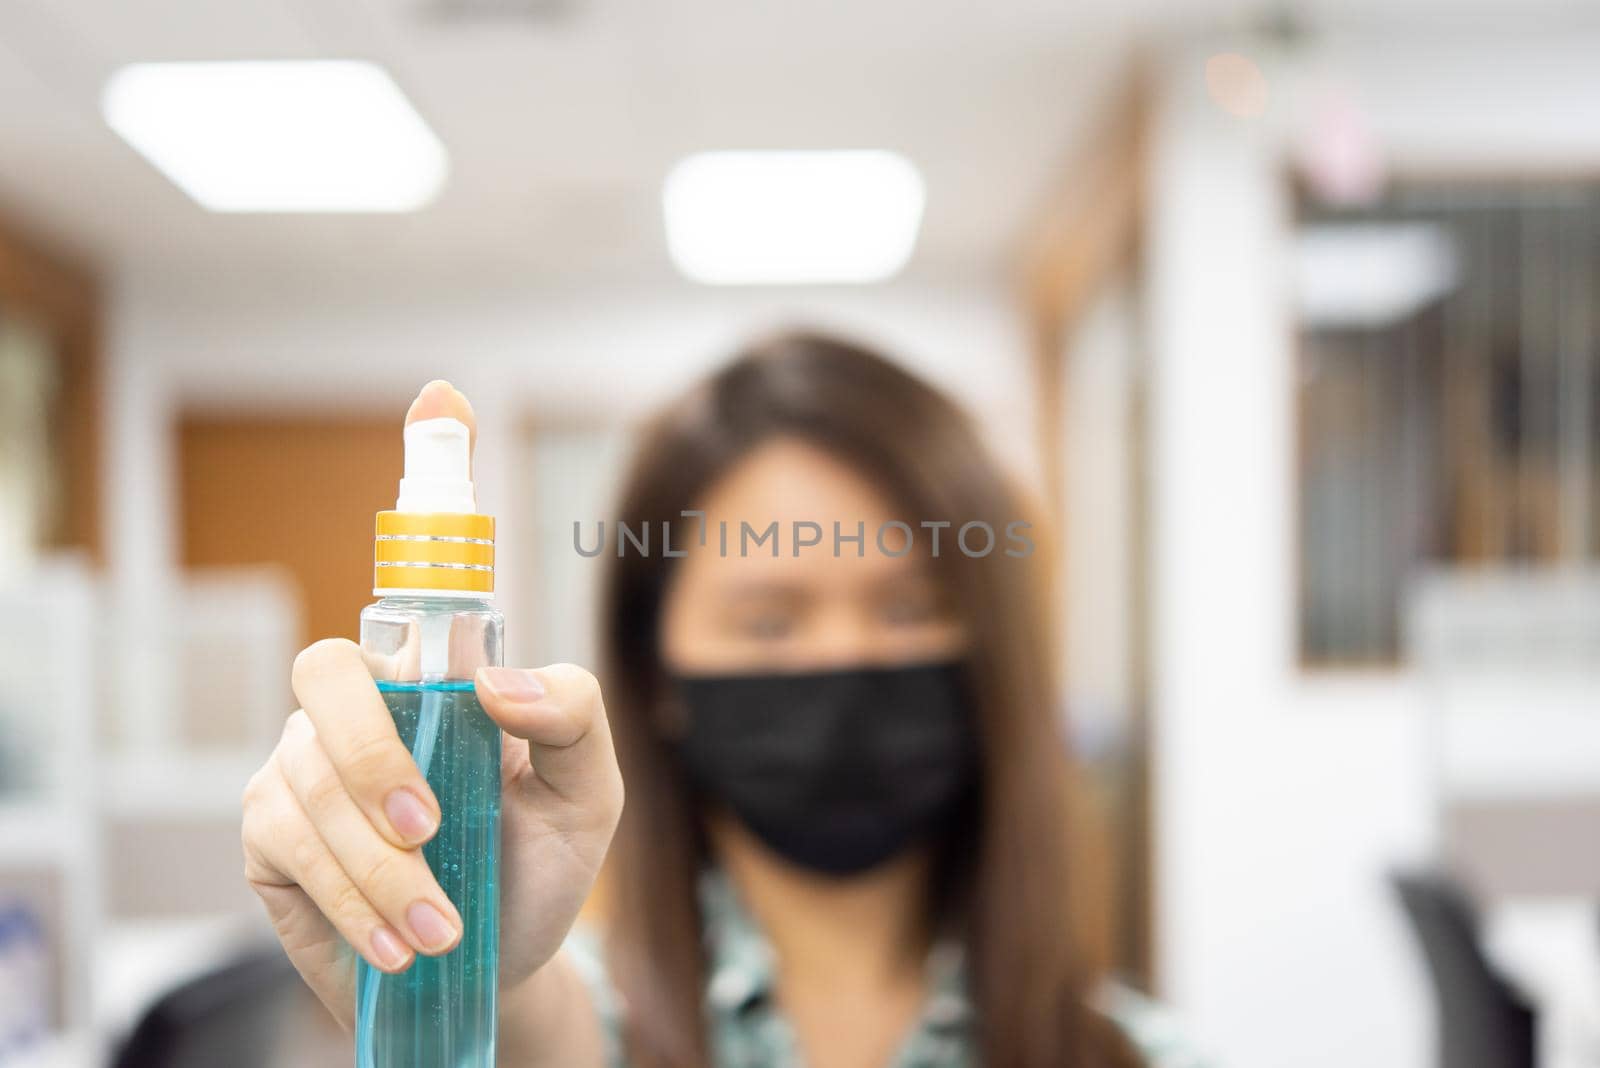 Woman wearing mask protection epidemic flu covid19 by PongMoji